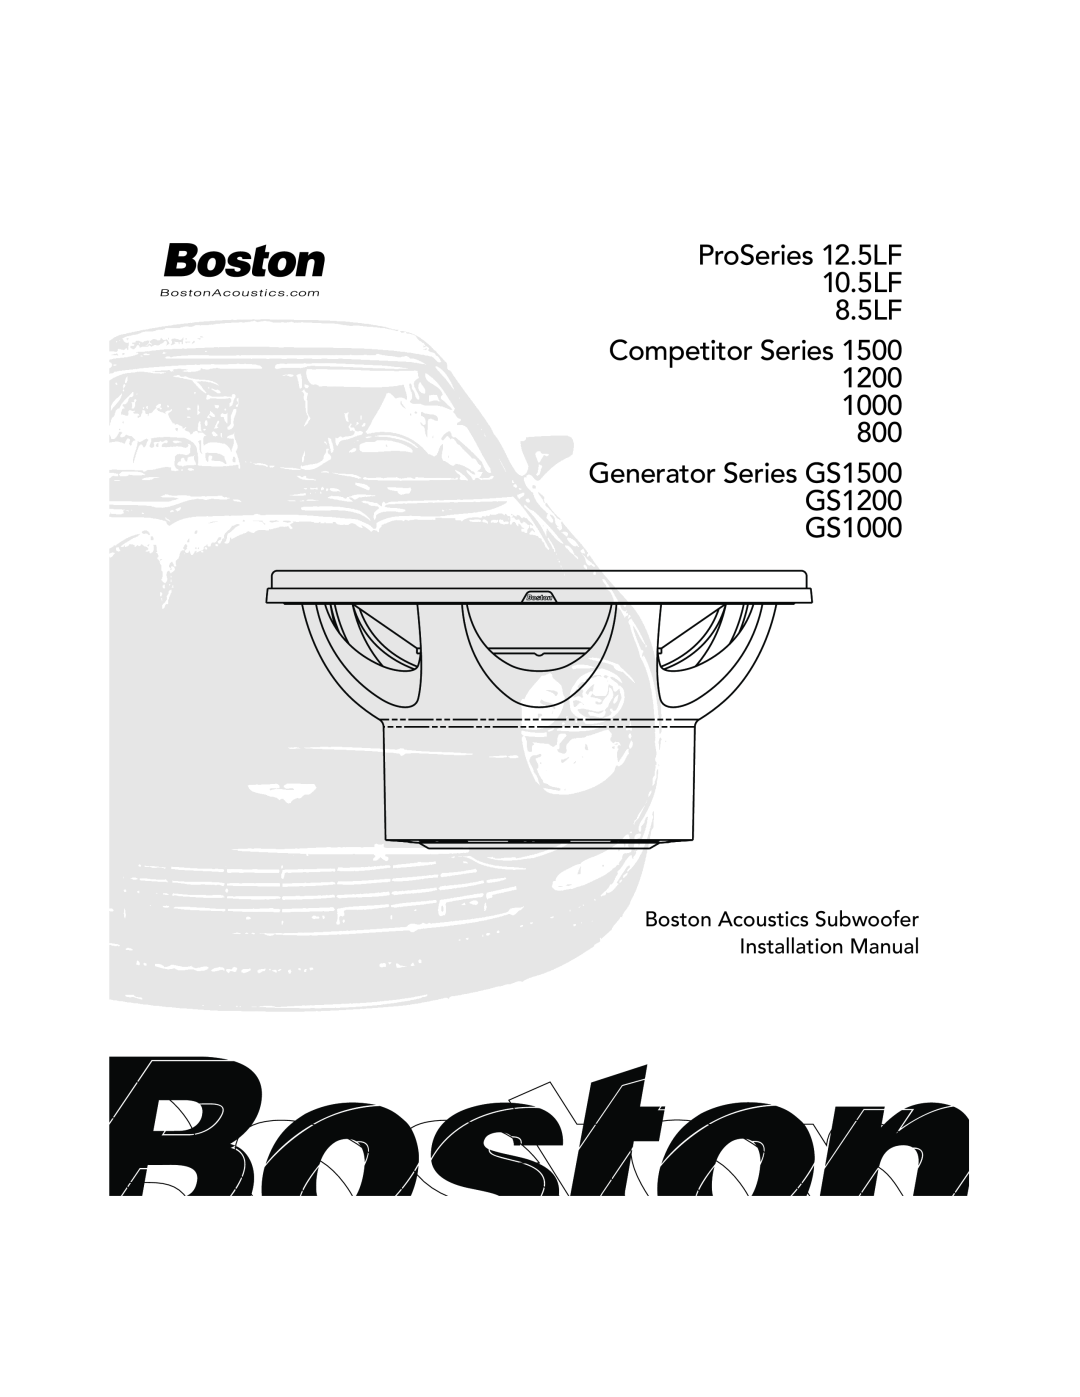 Boston Acoustics 800 installation manual Boston Acoustics Subwoofer Installation Manual, Competitor Series 1500 1200 